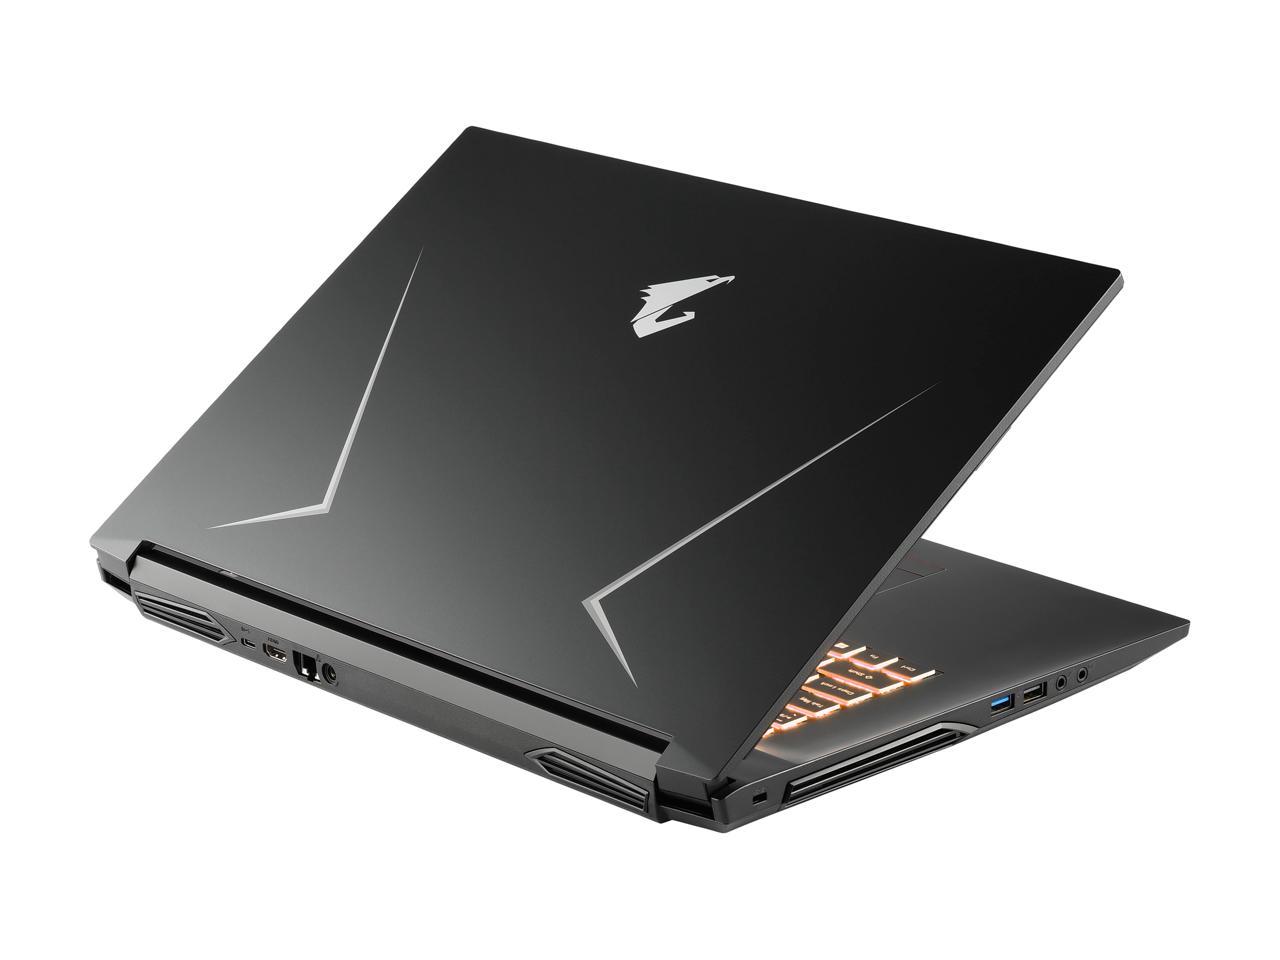 OOS: $929 after $100 rebate: Gigabyte Aorus 7 - 17.3" 144 Hz  i7-10750H GeForce RTX 2060 16 GB Memory  512 GB SSD Gaming Laptop Notebook